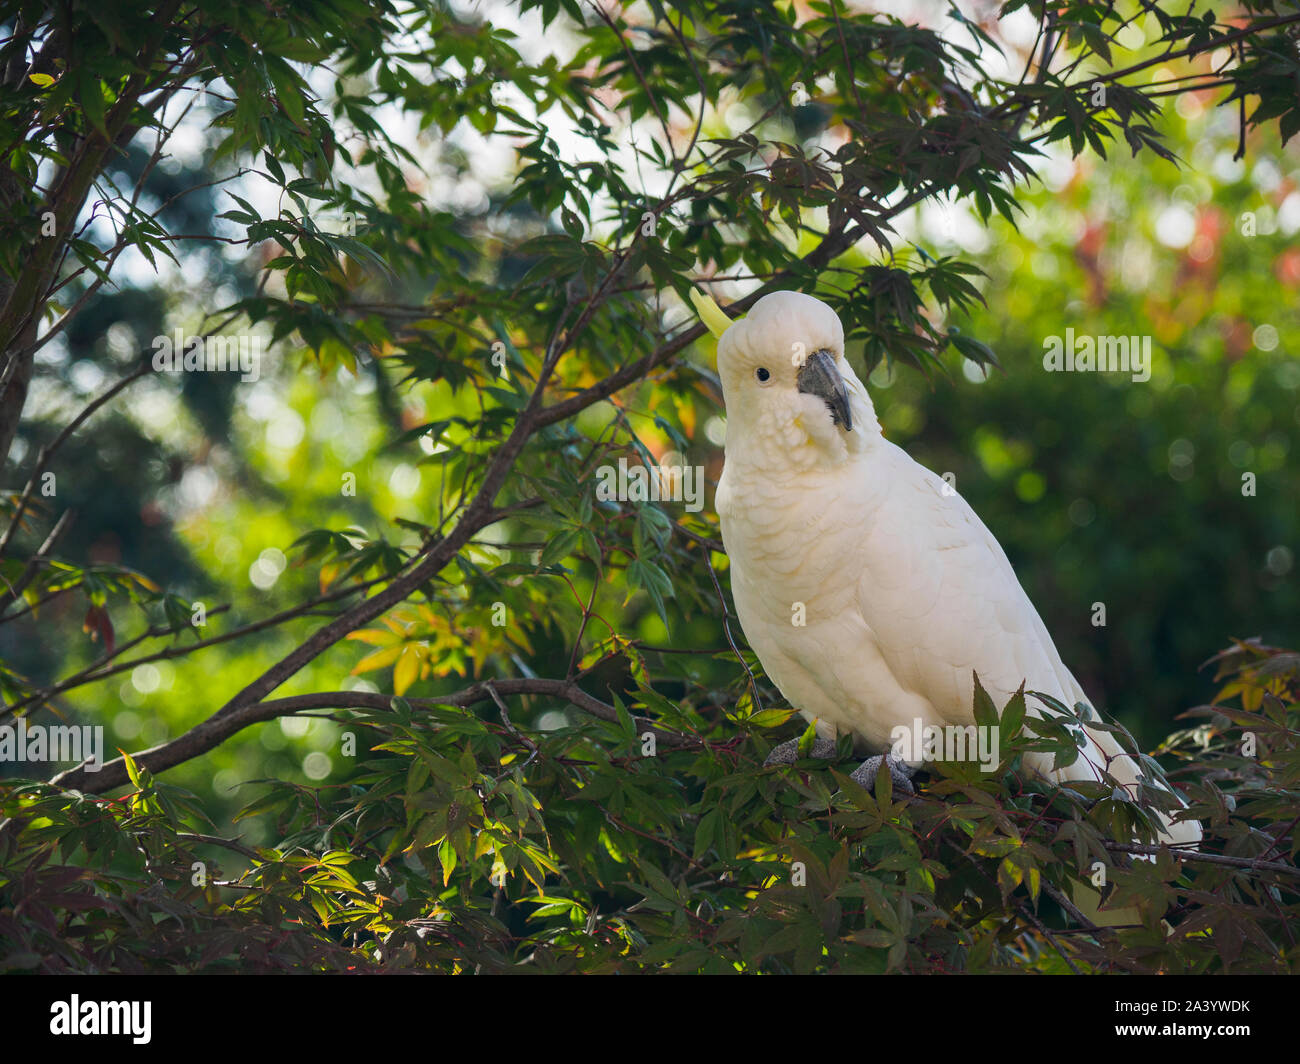 Cockatoo in tree Stock Photo